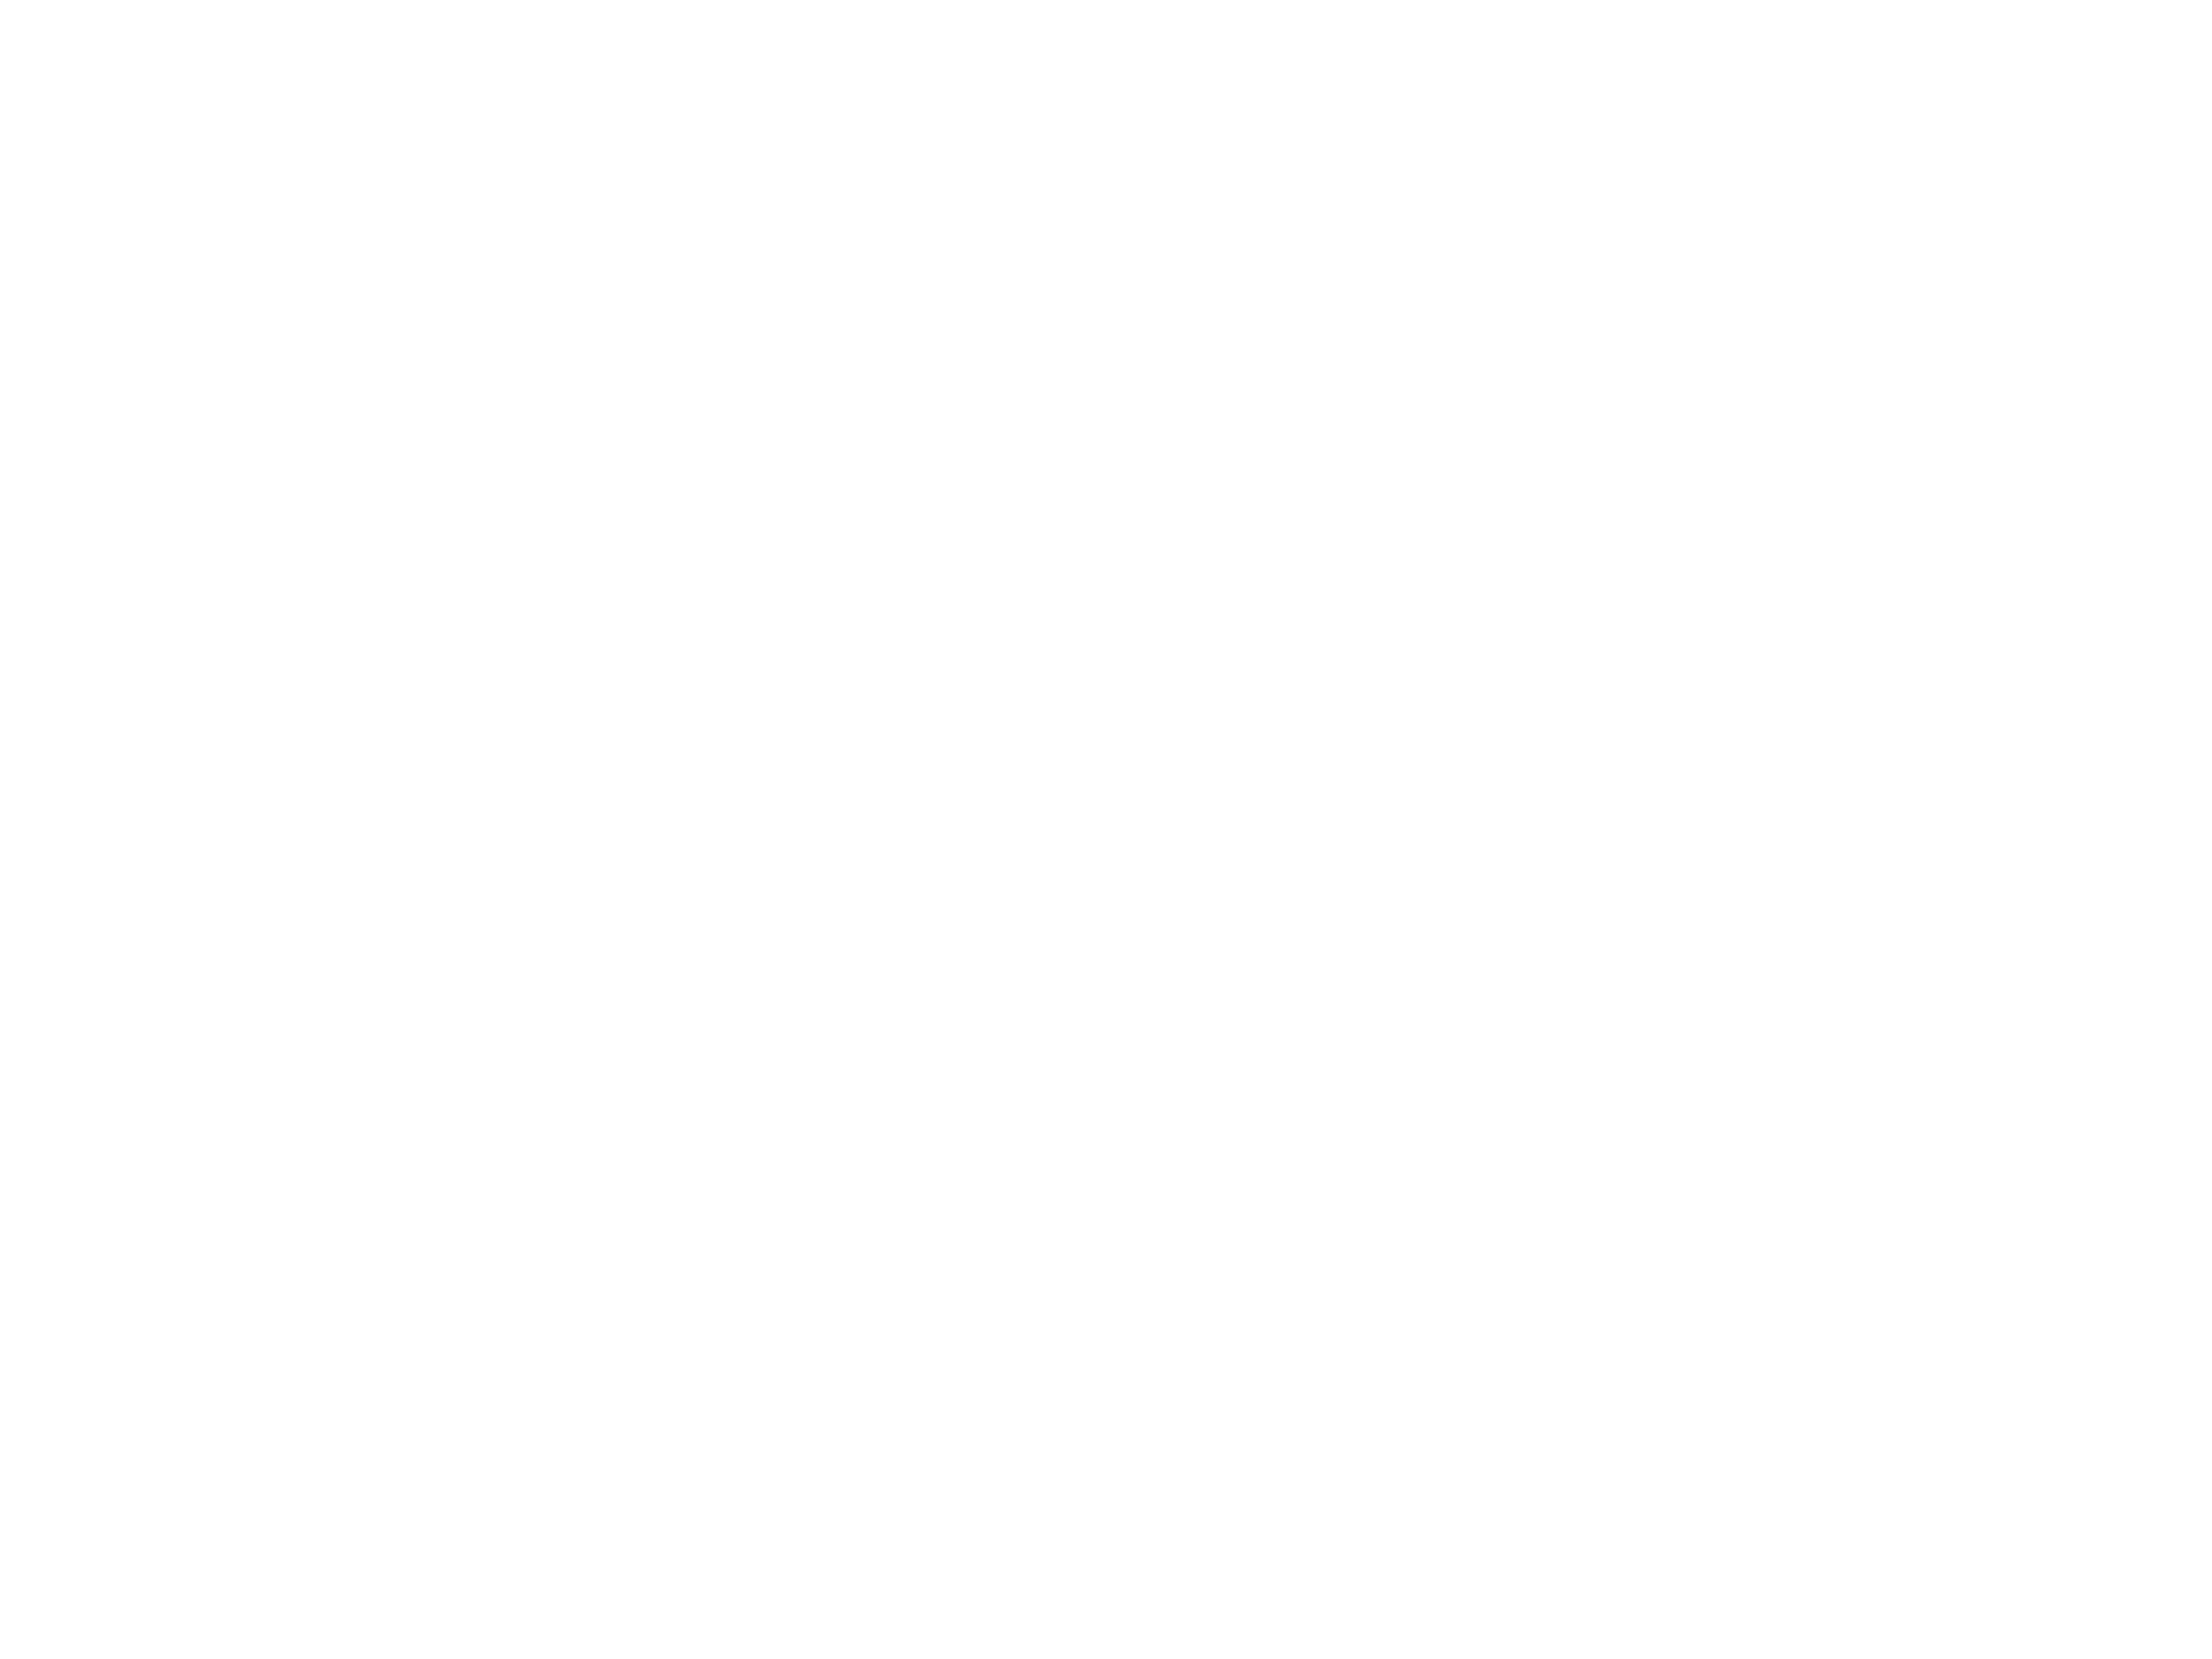 Minimal lines modern firefly logo design Vector Image